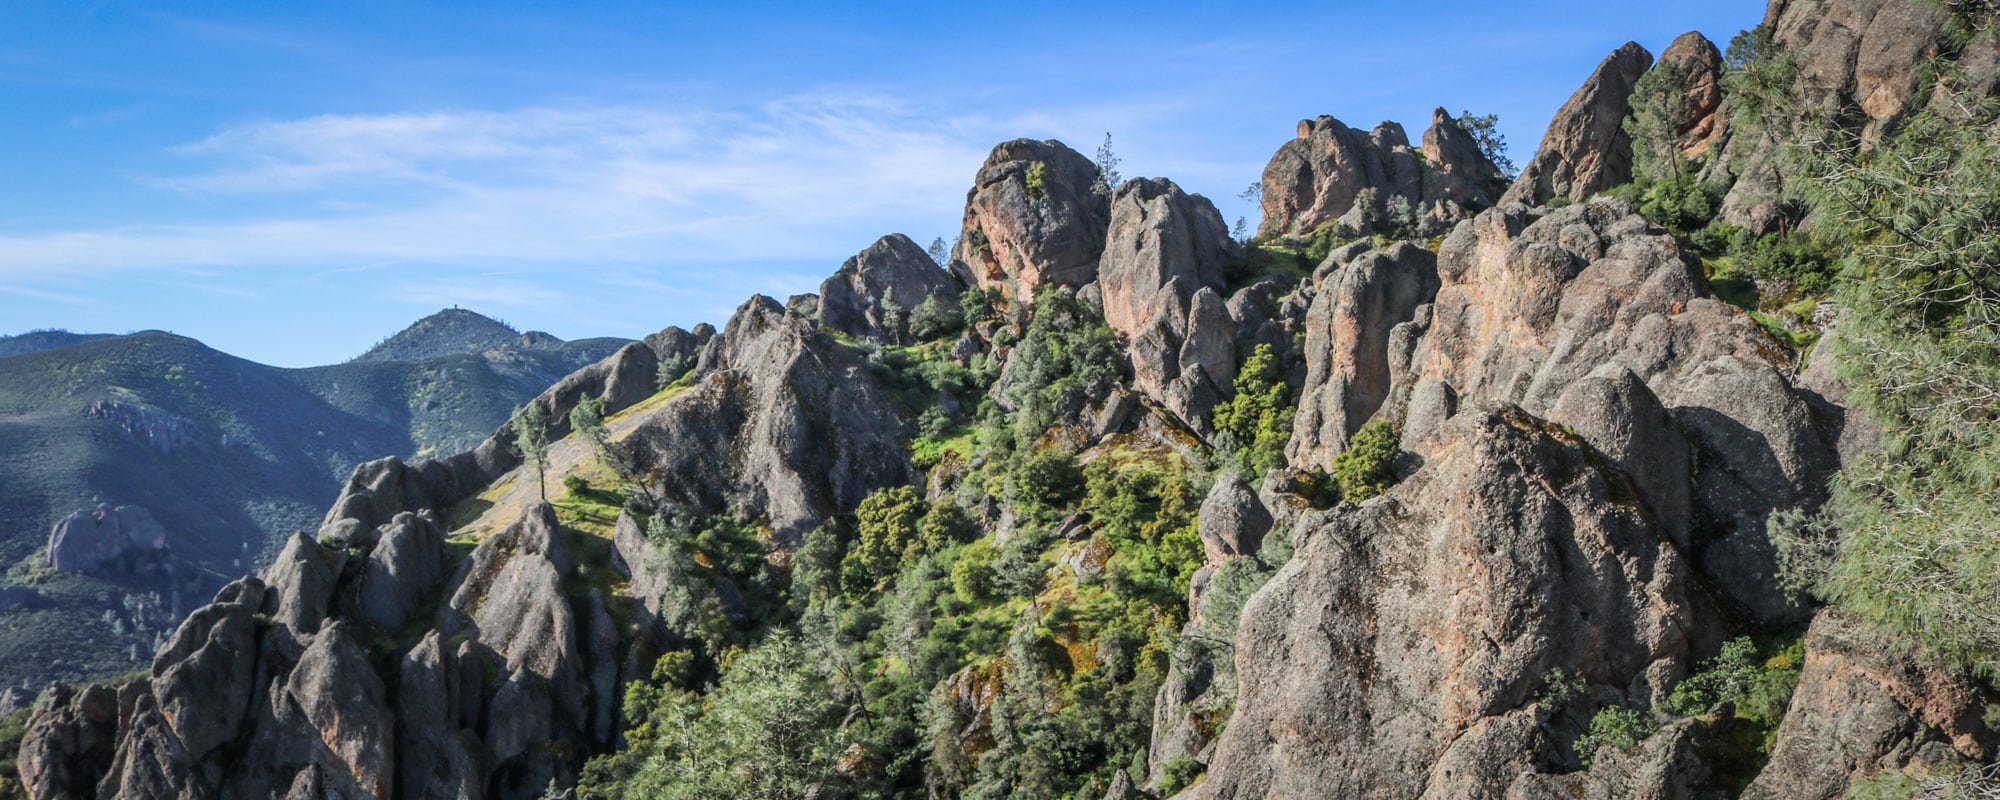 Pinnacles National Park - Banner Rock Formations